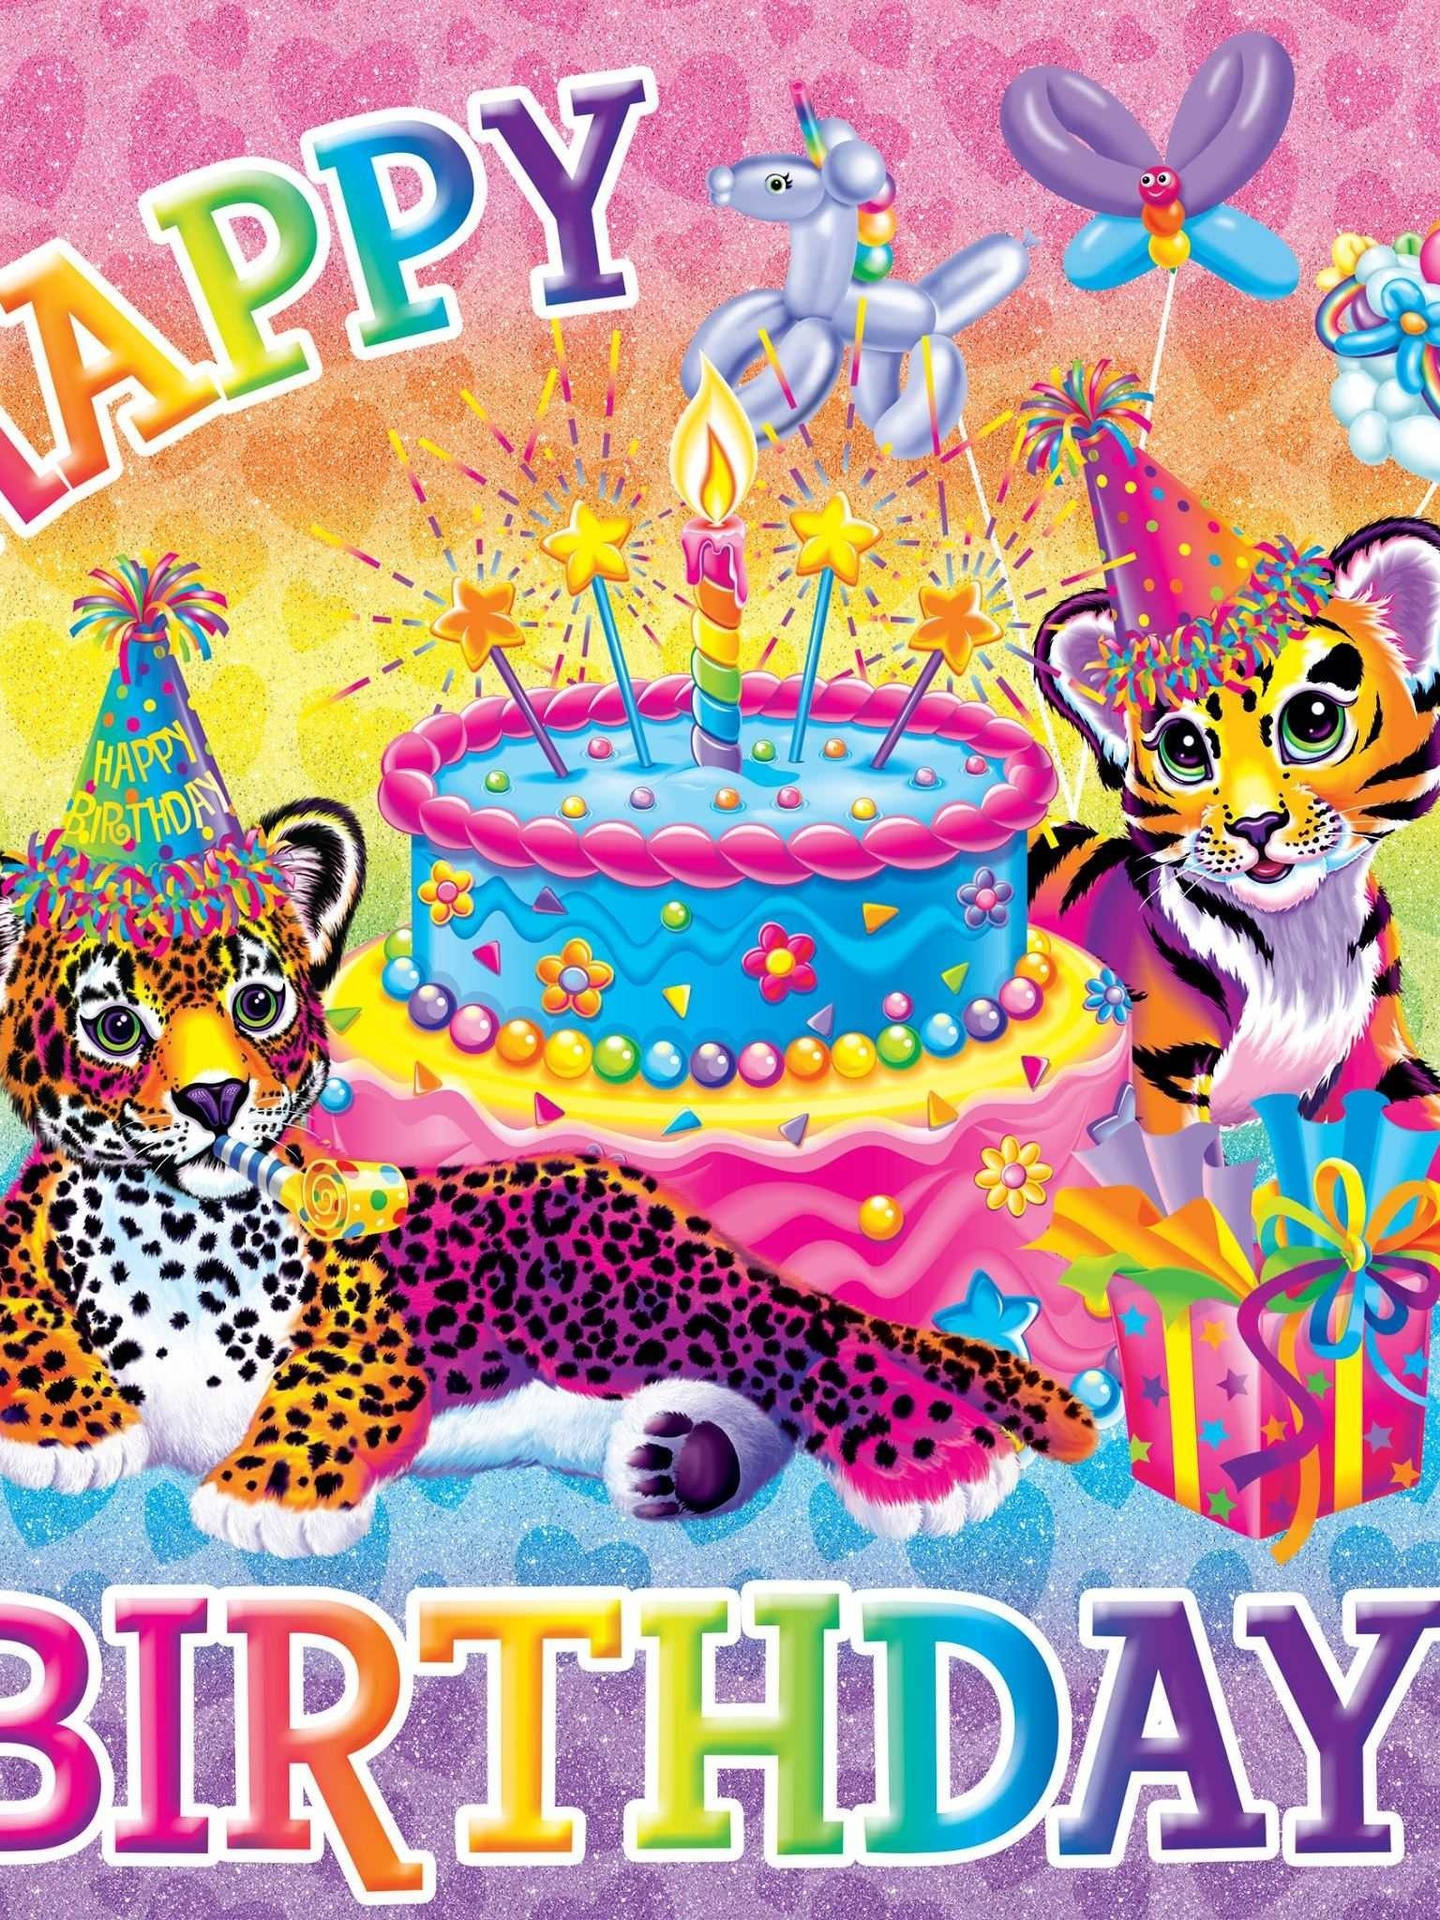 Happy Birthday Lisa Frank Wallpaper